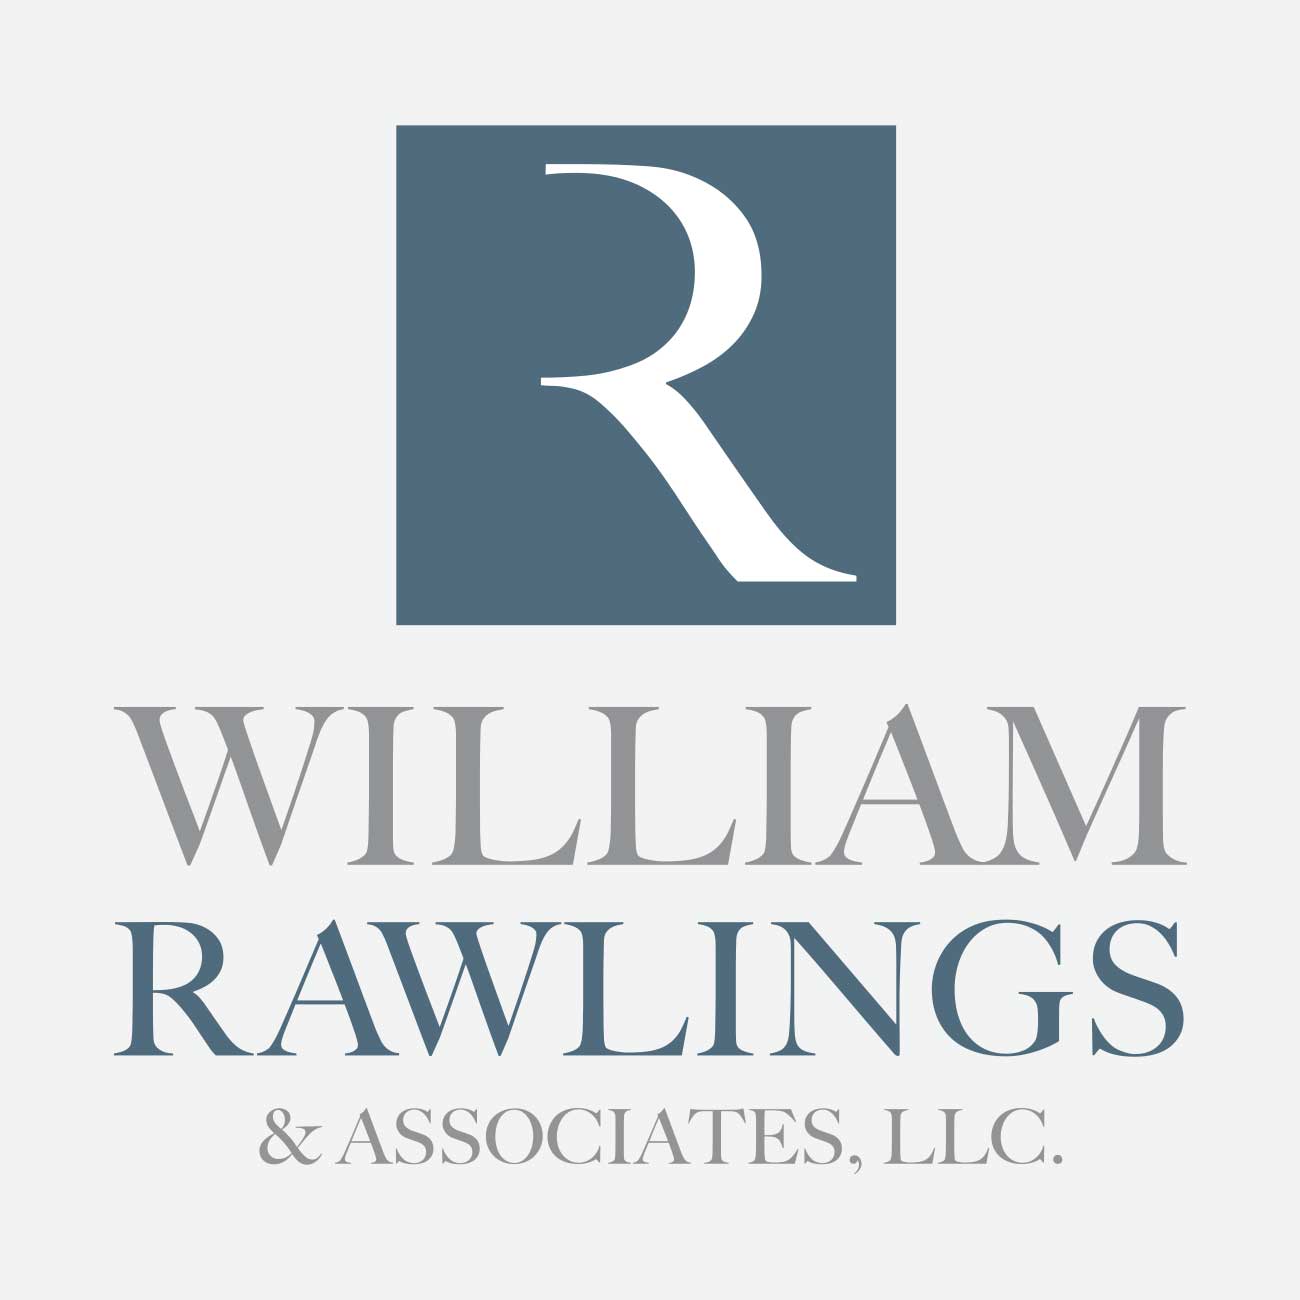 Rawlings Law Logo